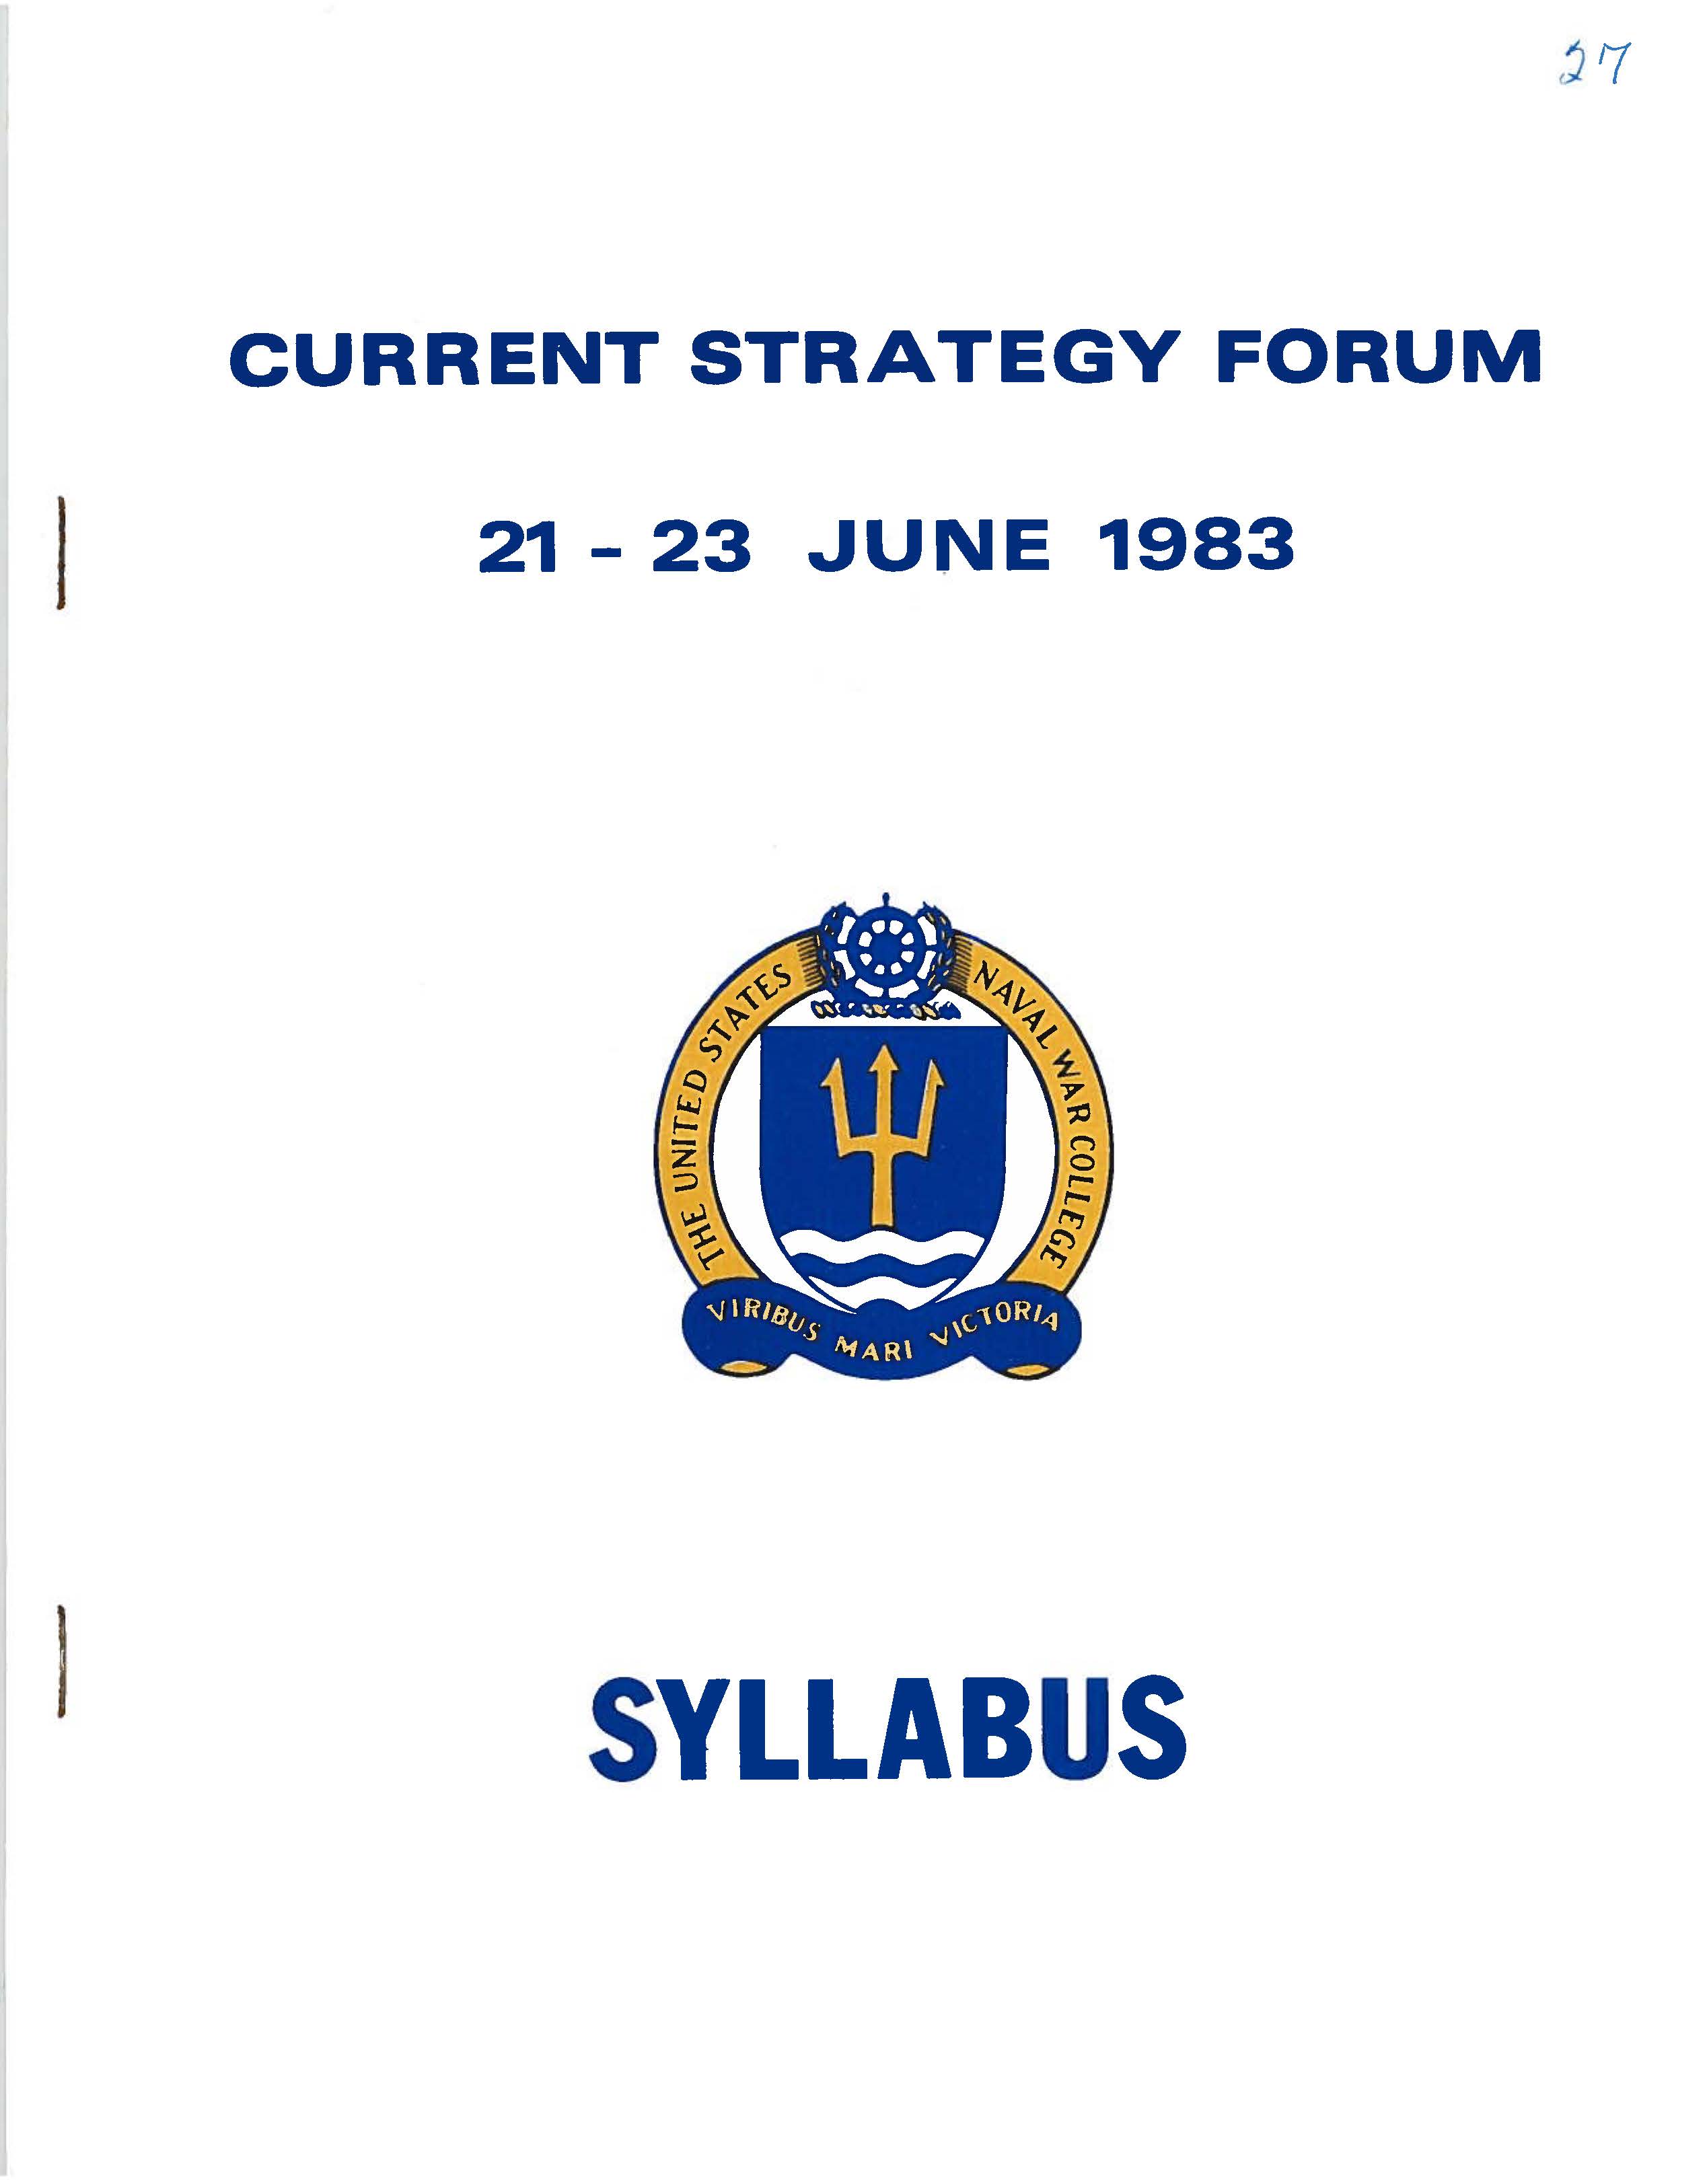 Current Strategy Forum syllabus, 1983